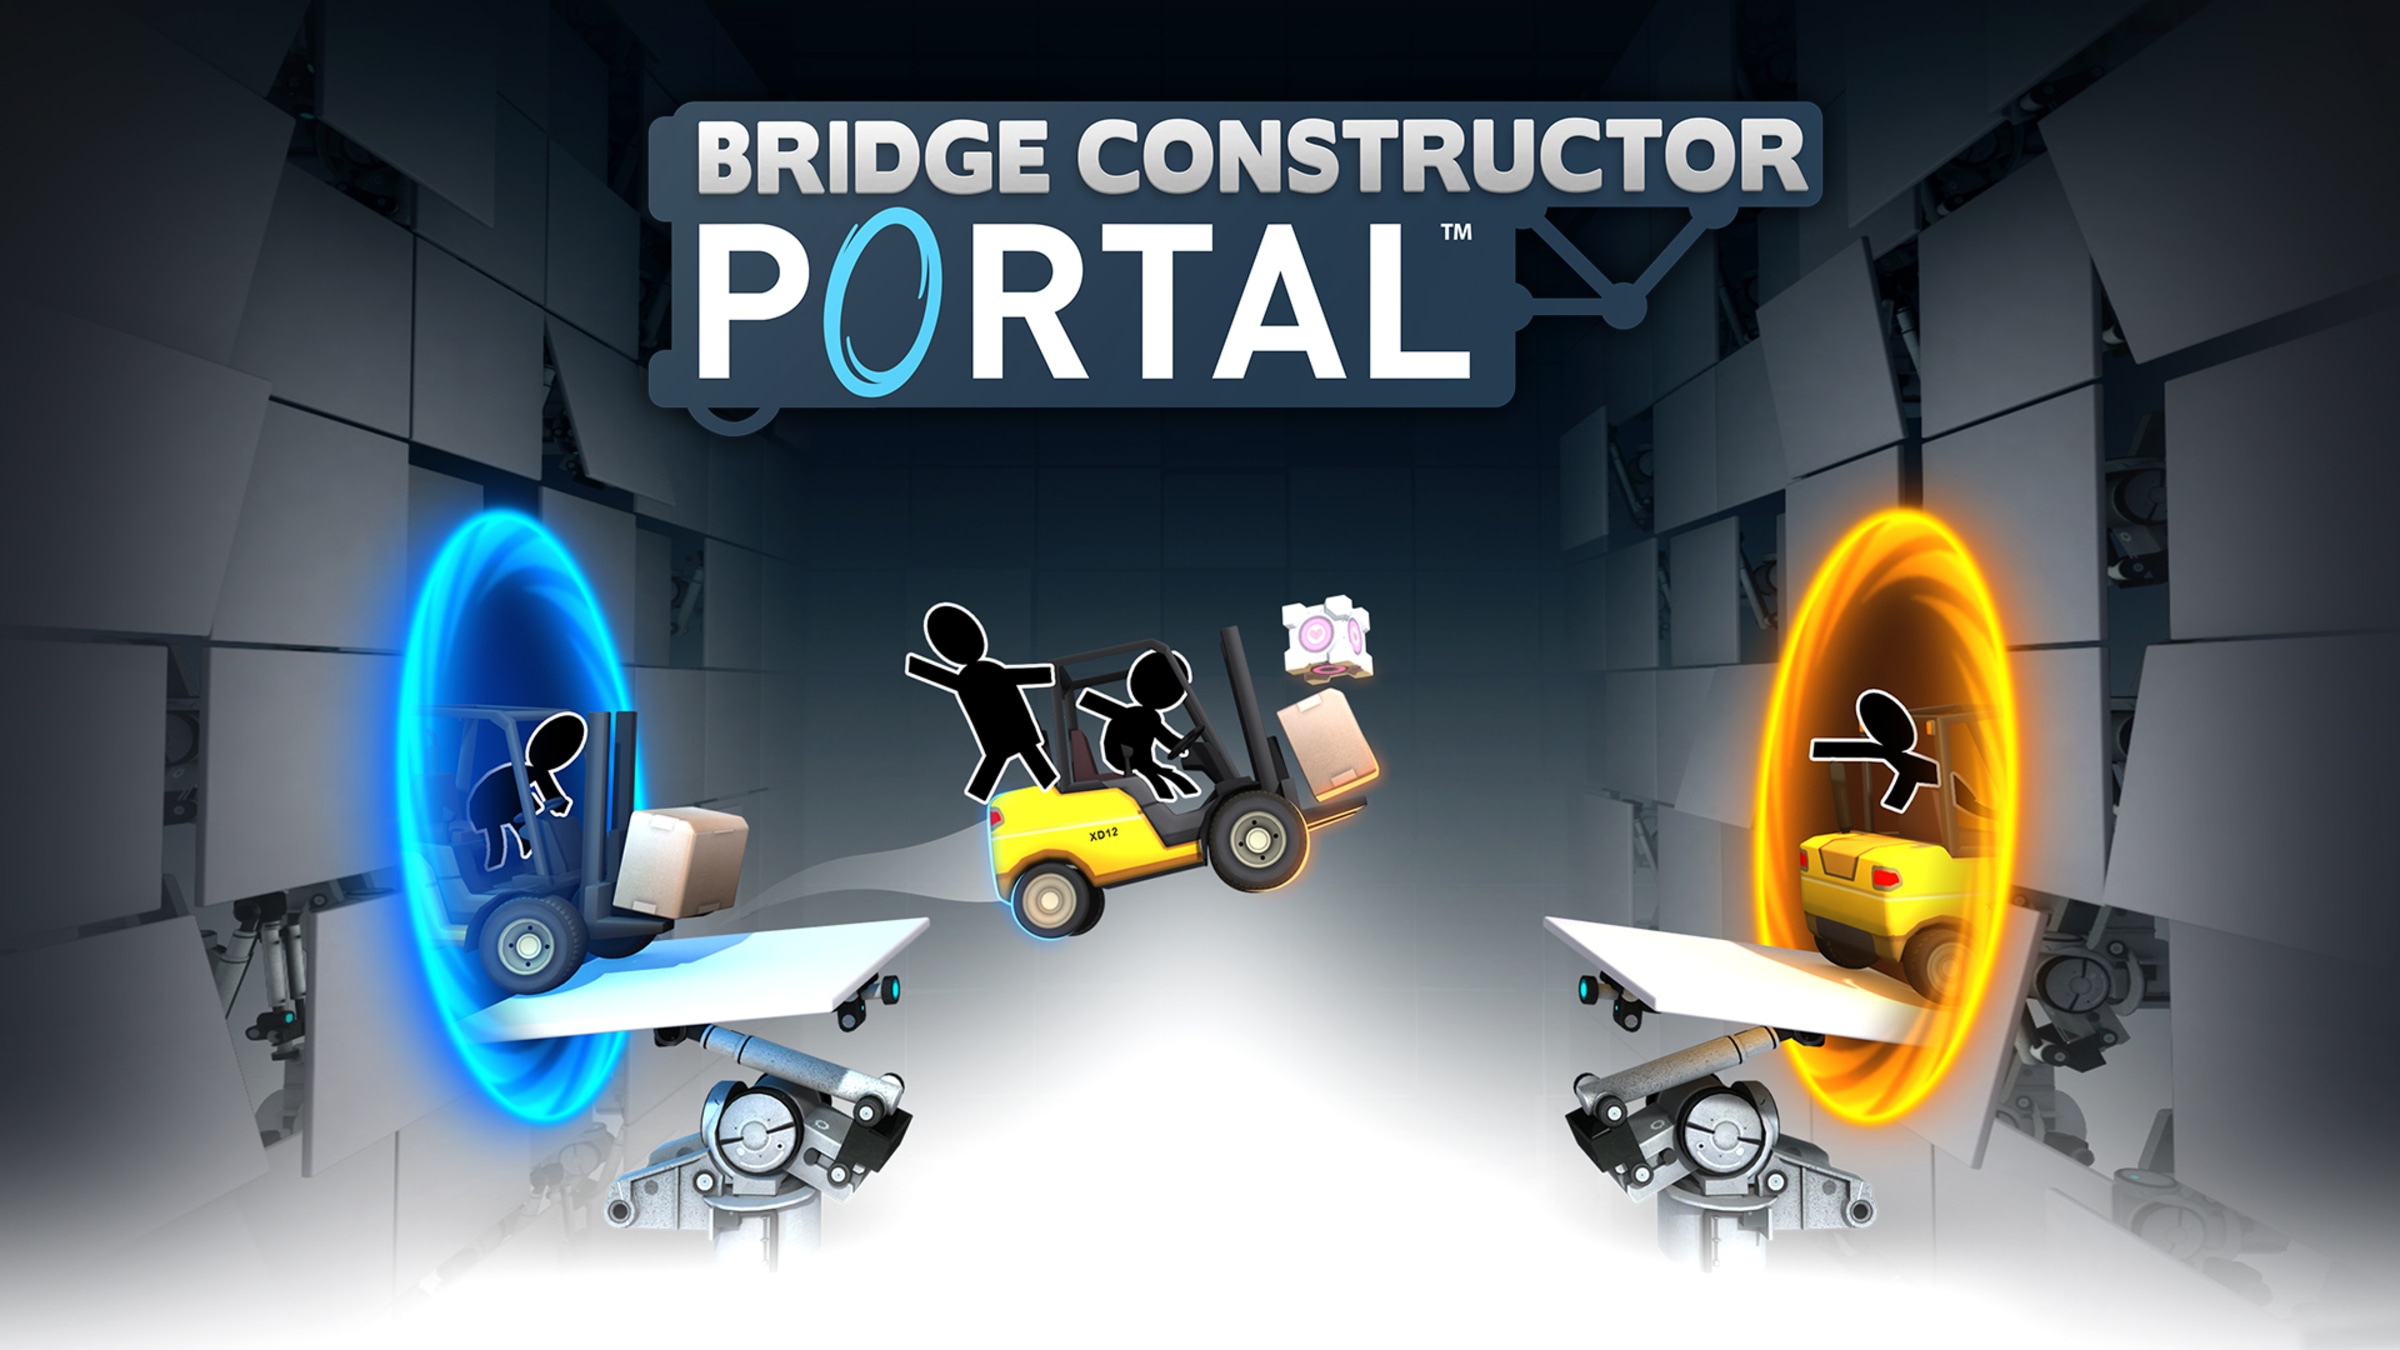 Bridge Constructor Portal (Digital Download): Switch $2, PC $1.20